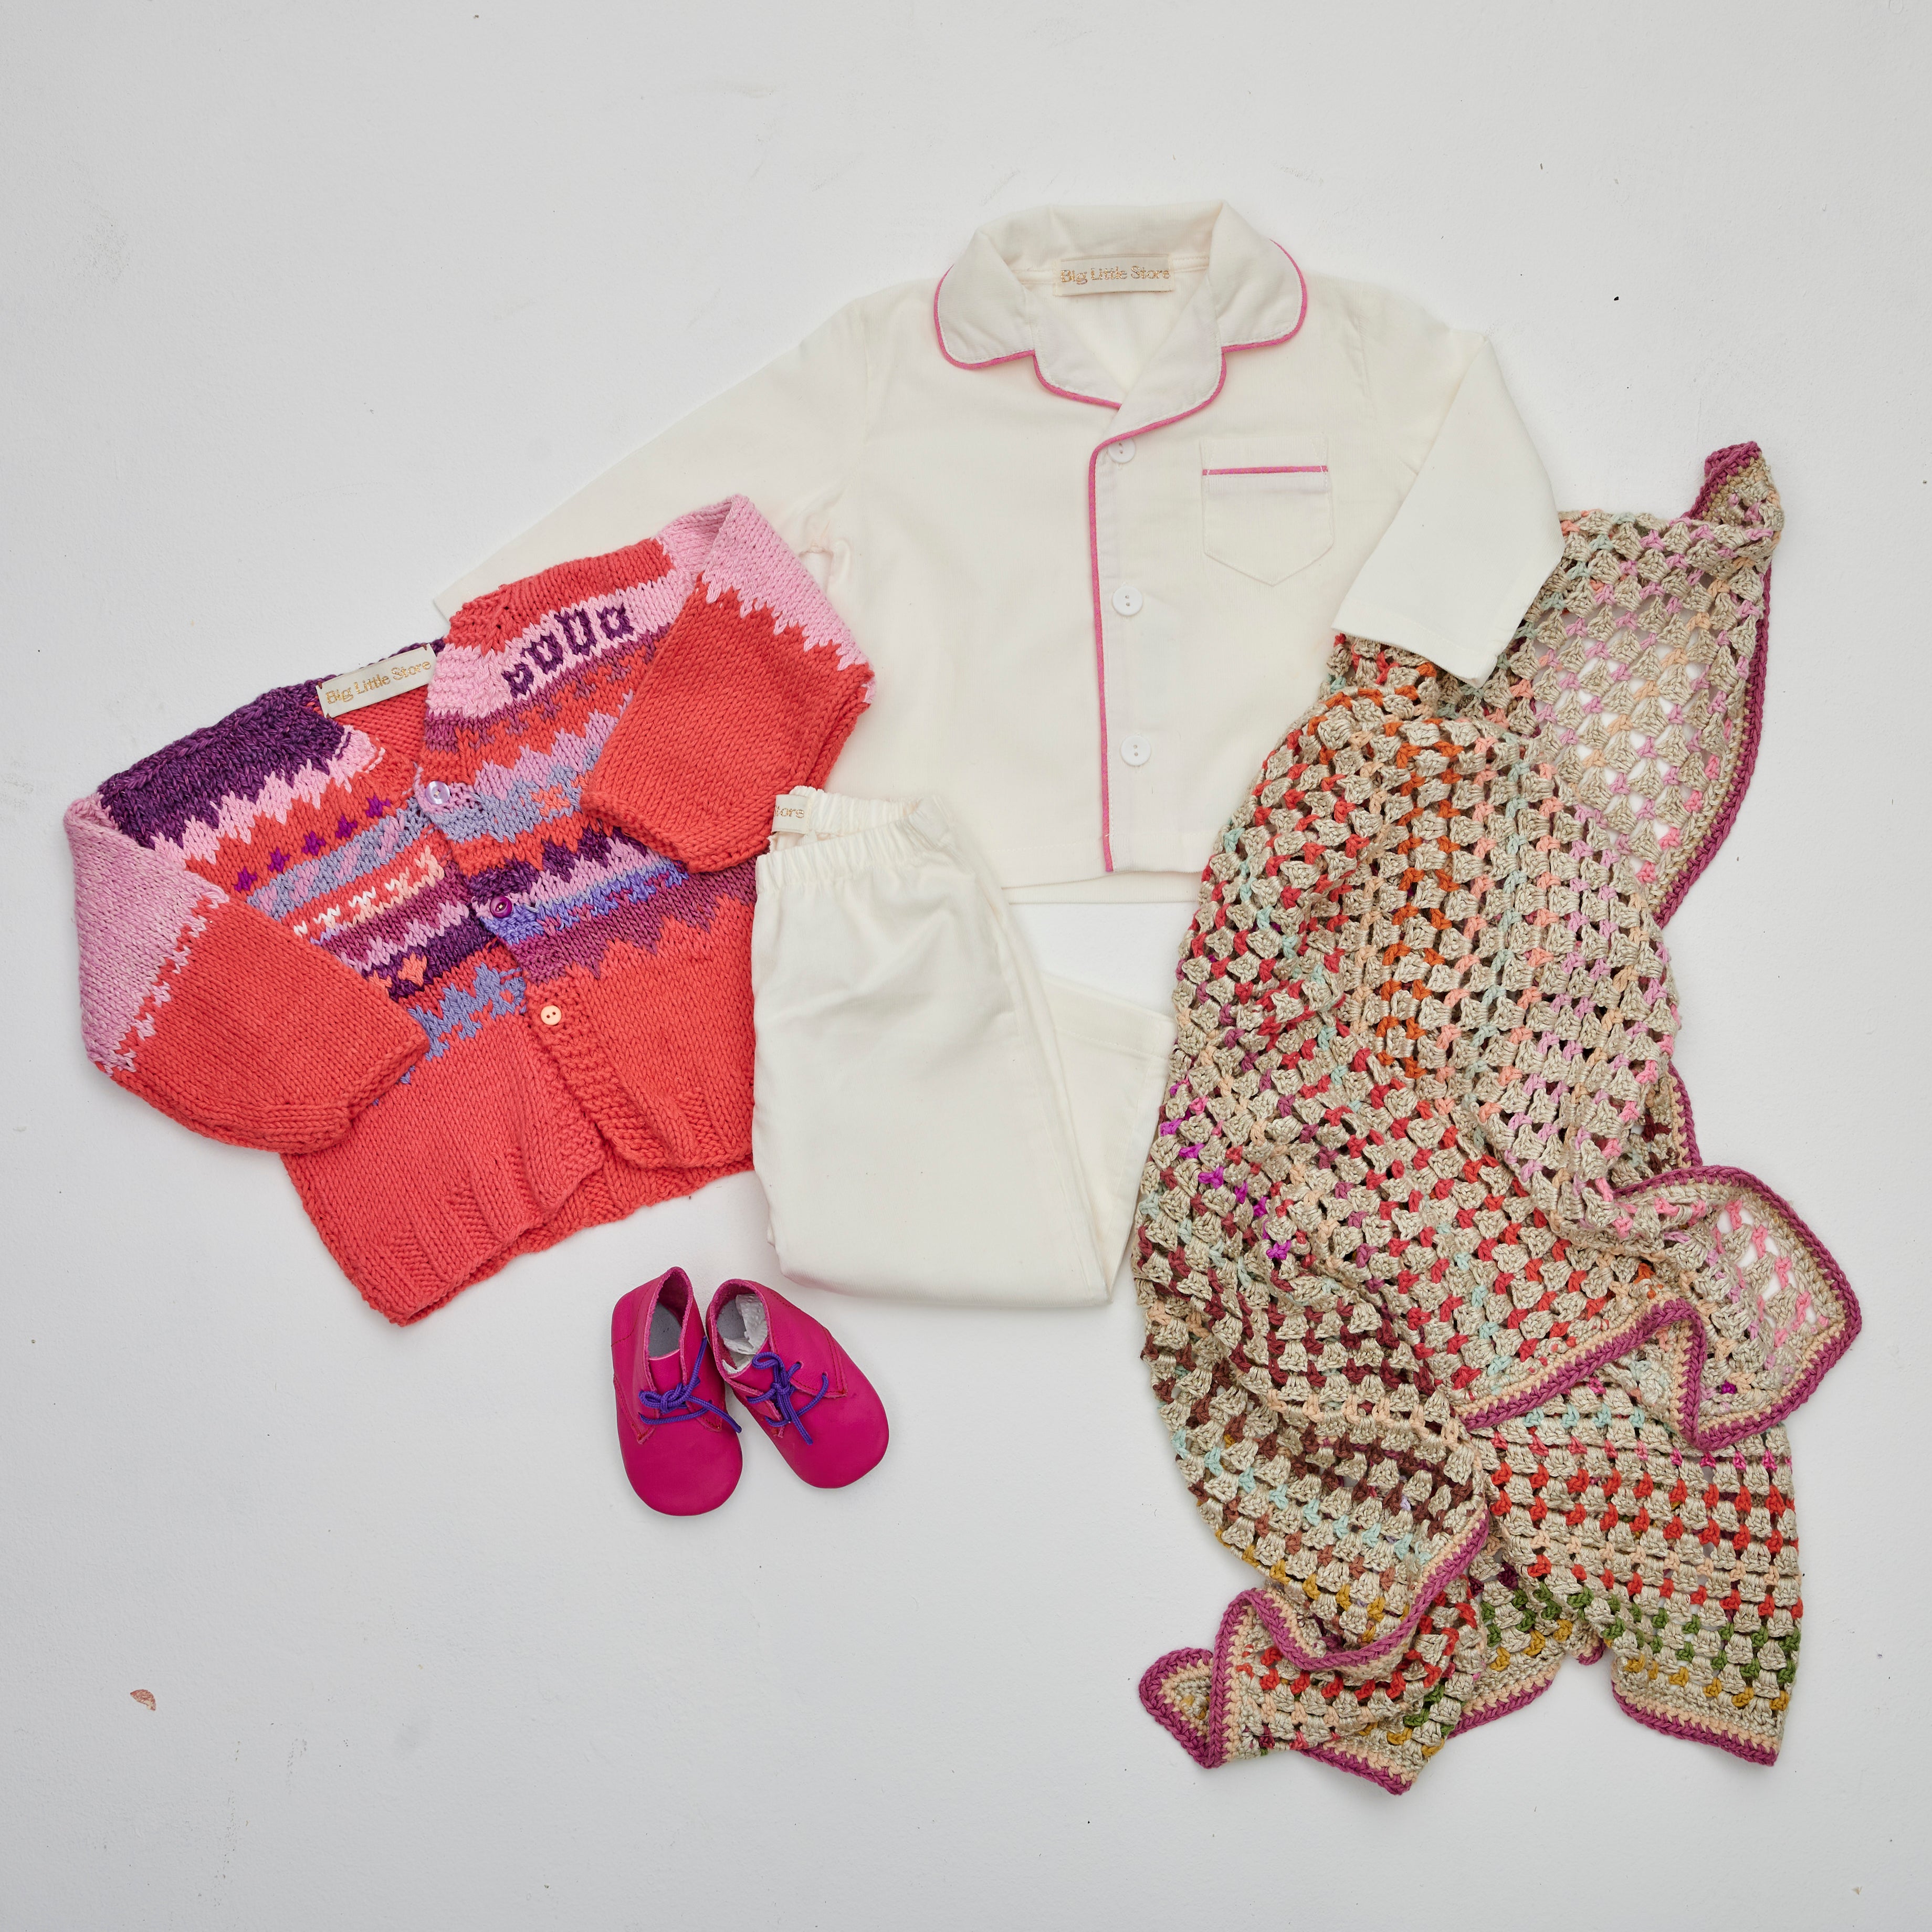 Hand-crochet baby blankie